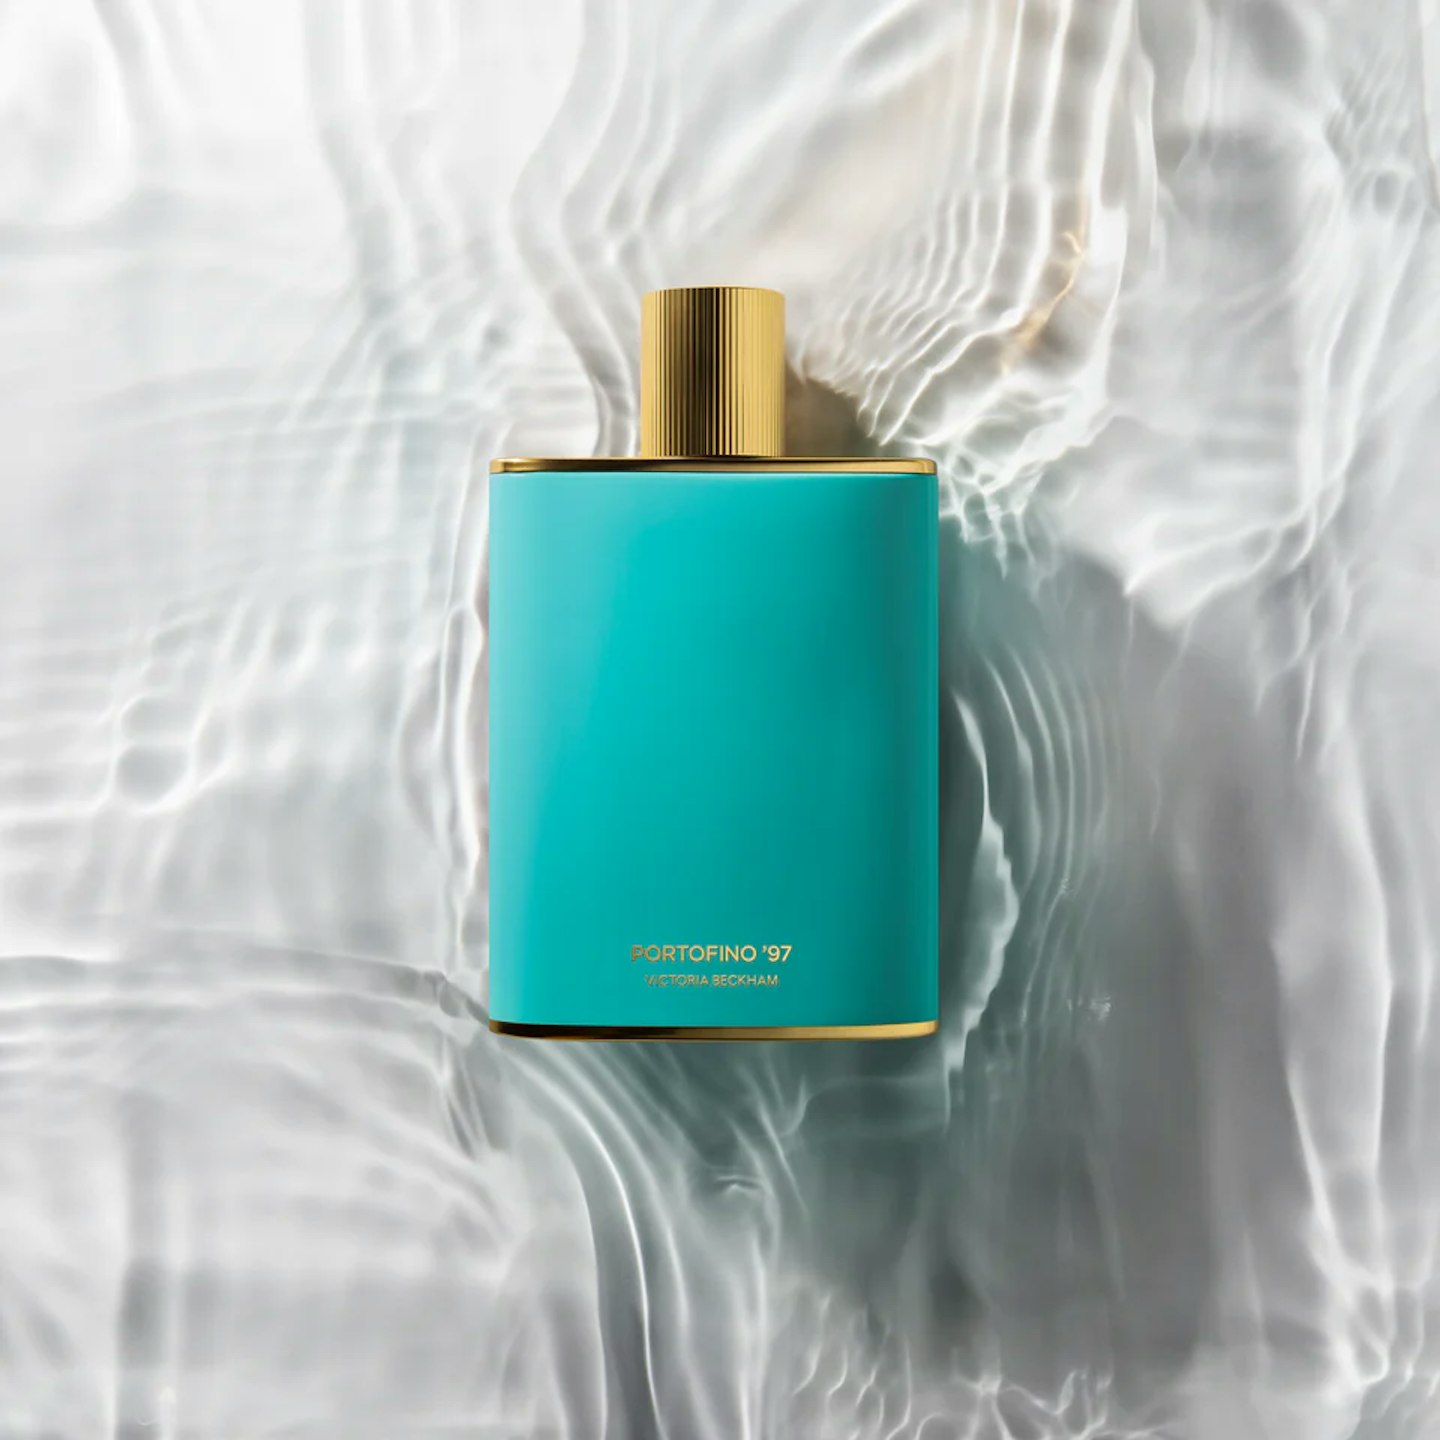 Victoria Beckham perfume